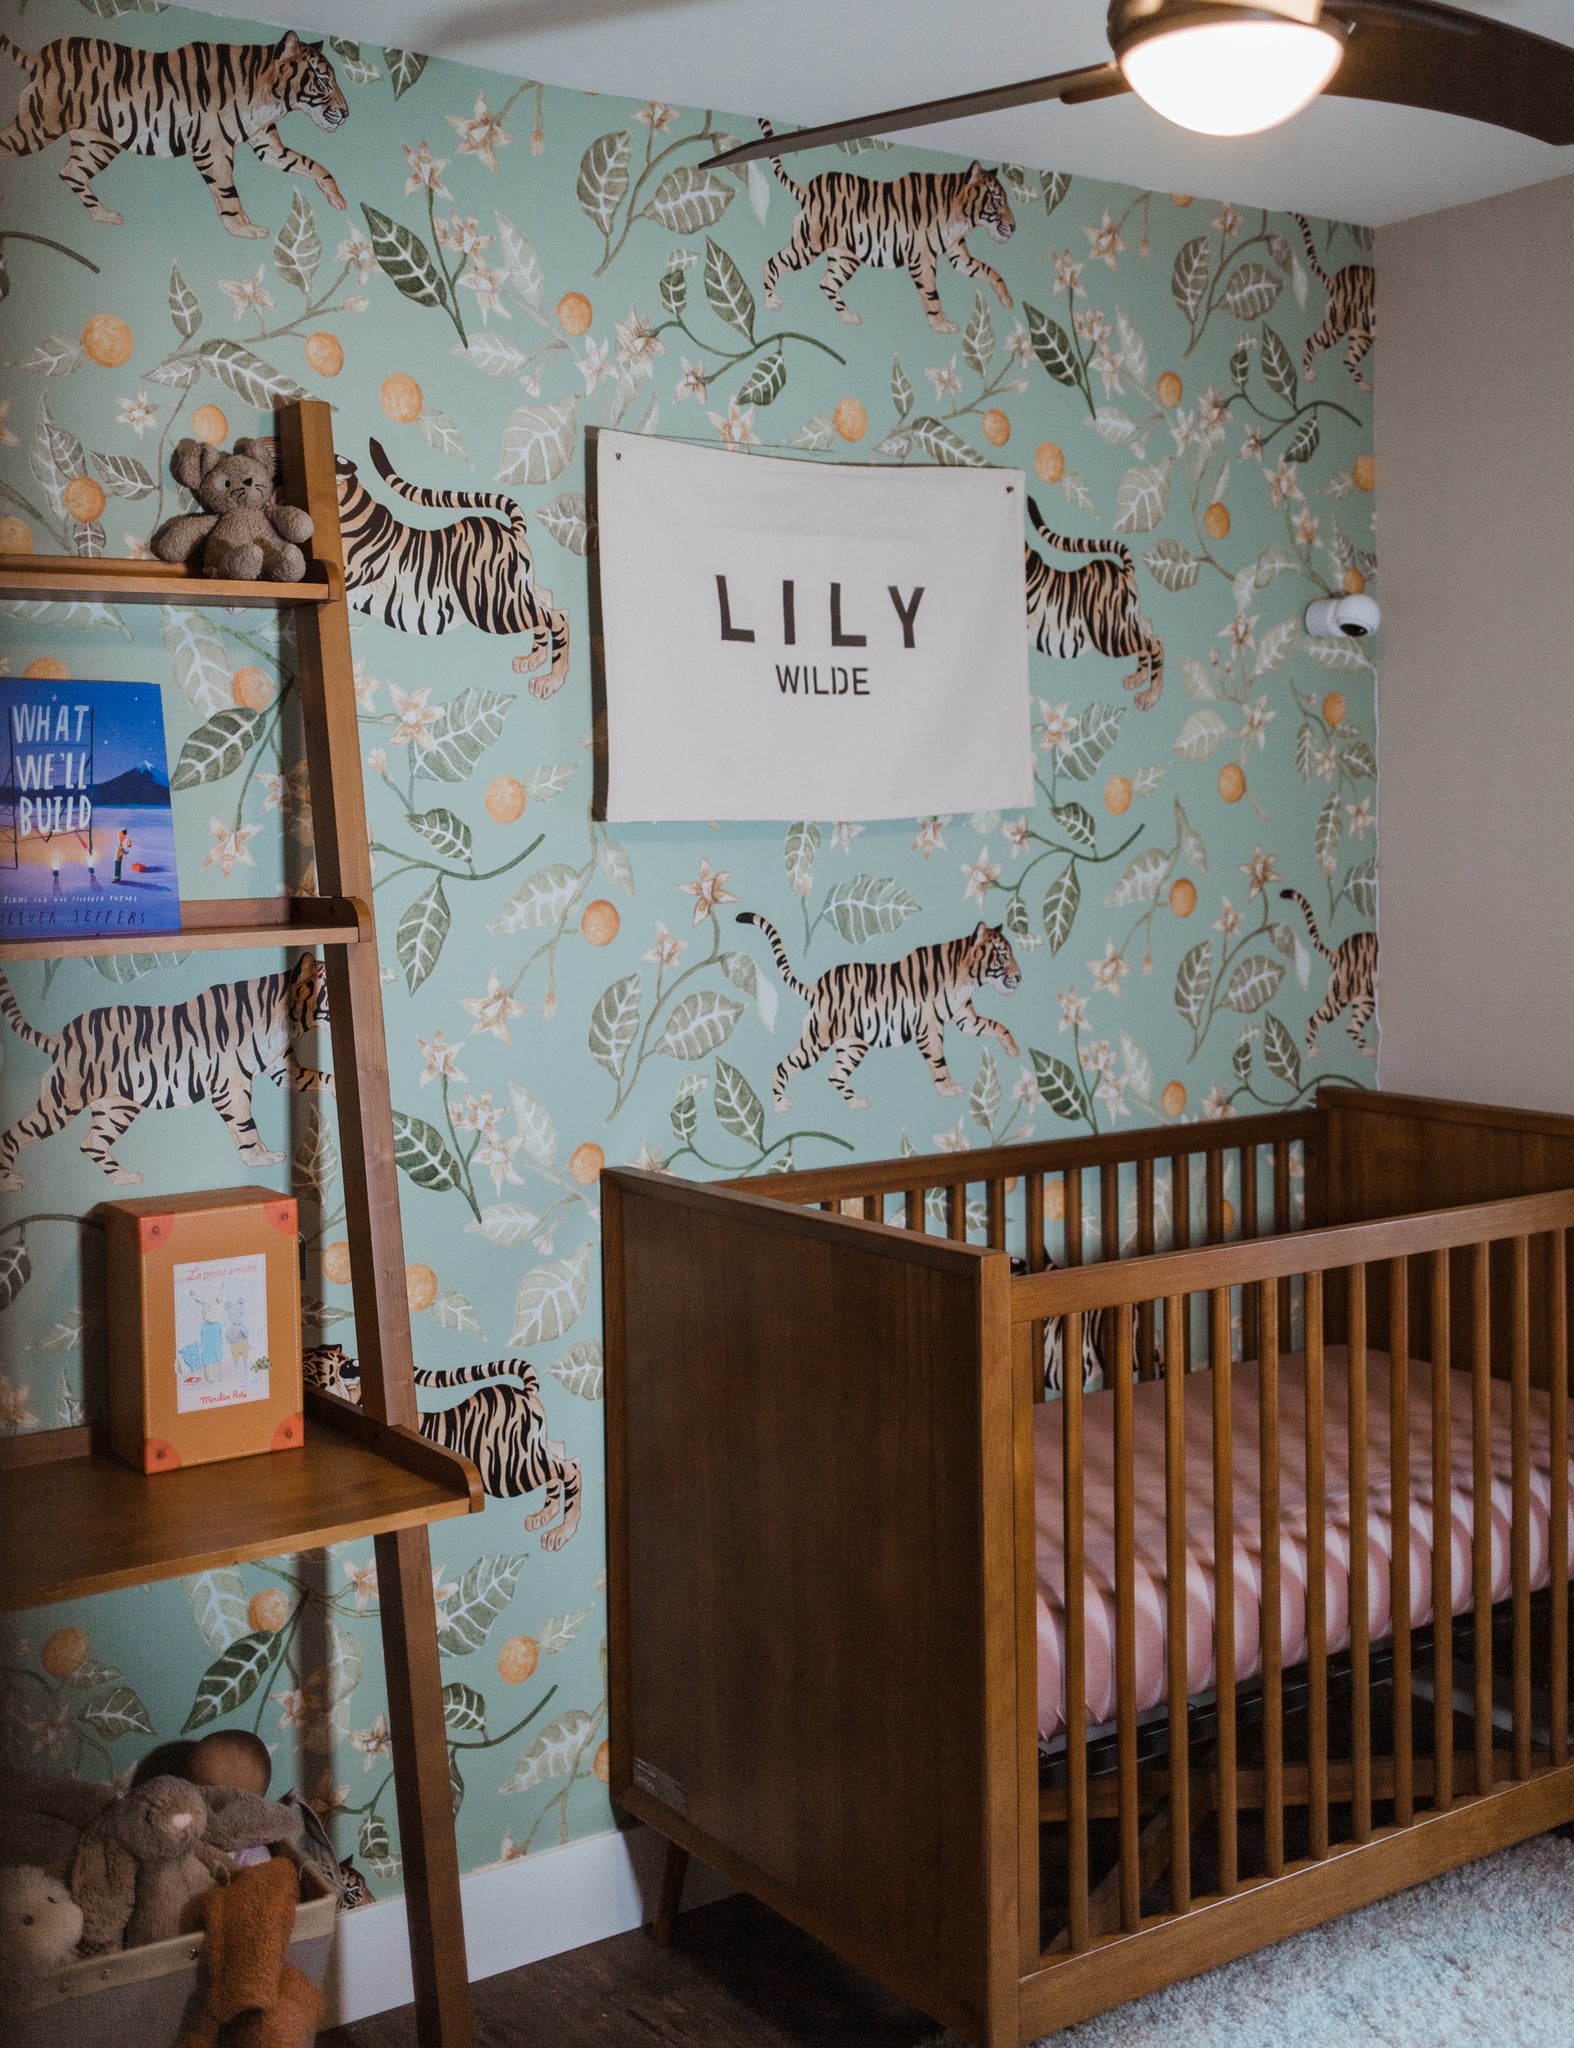 Lily Wilde's Nursery Reveal